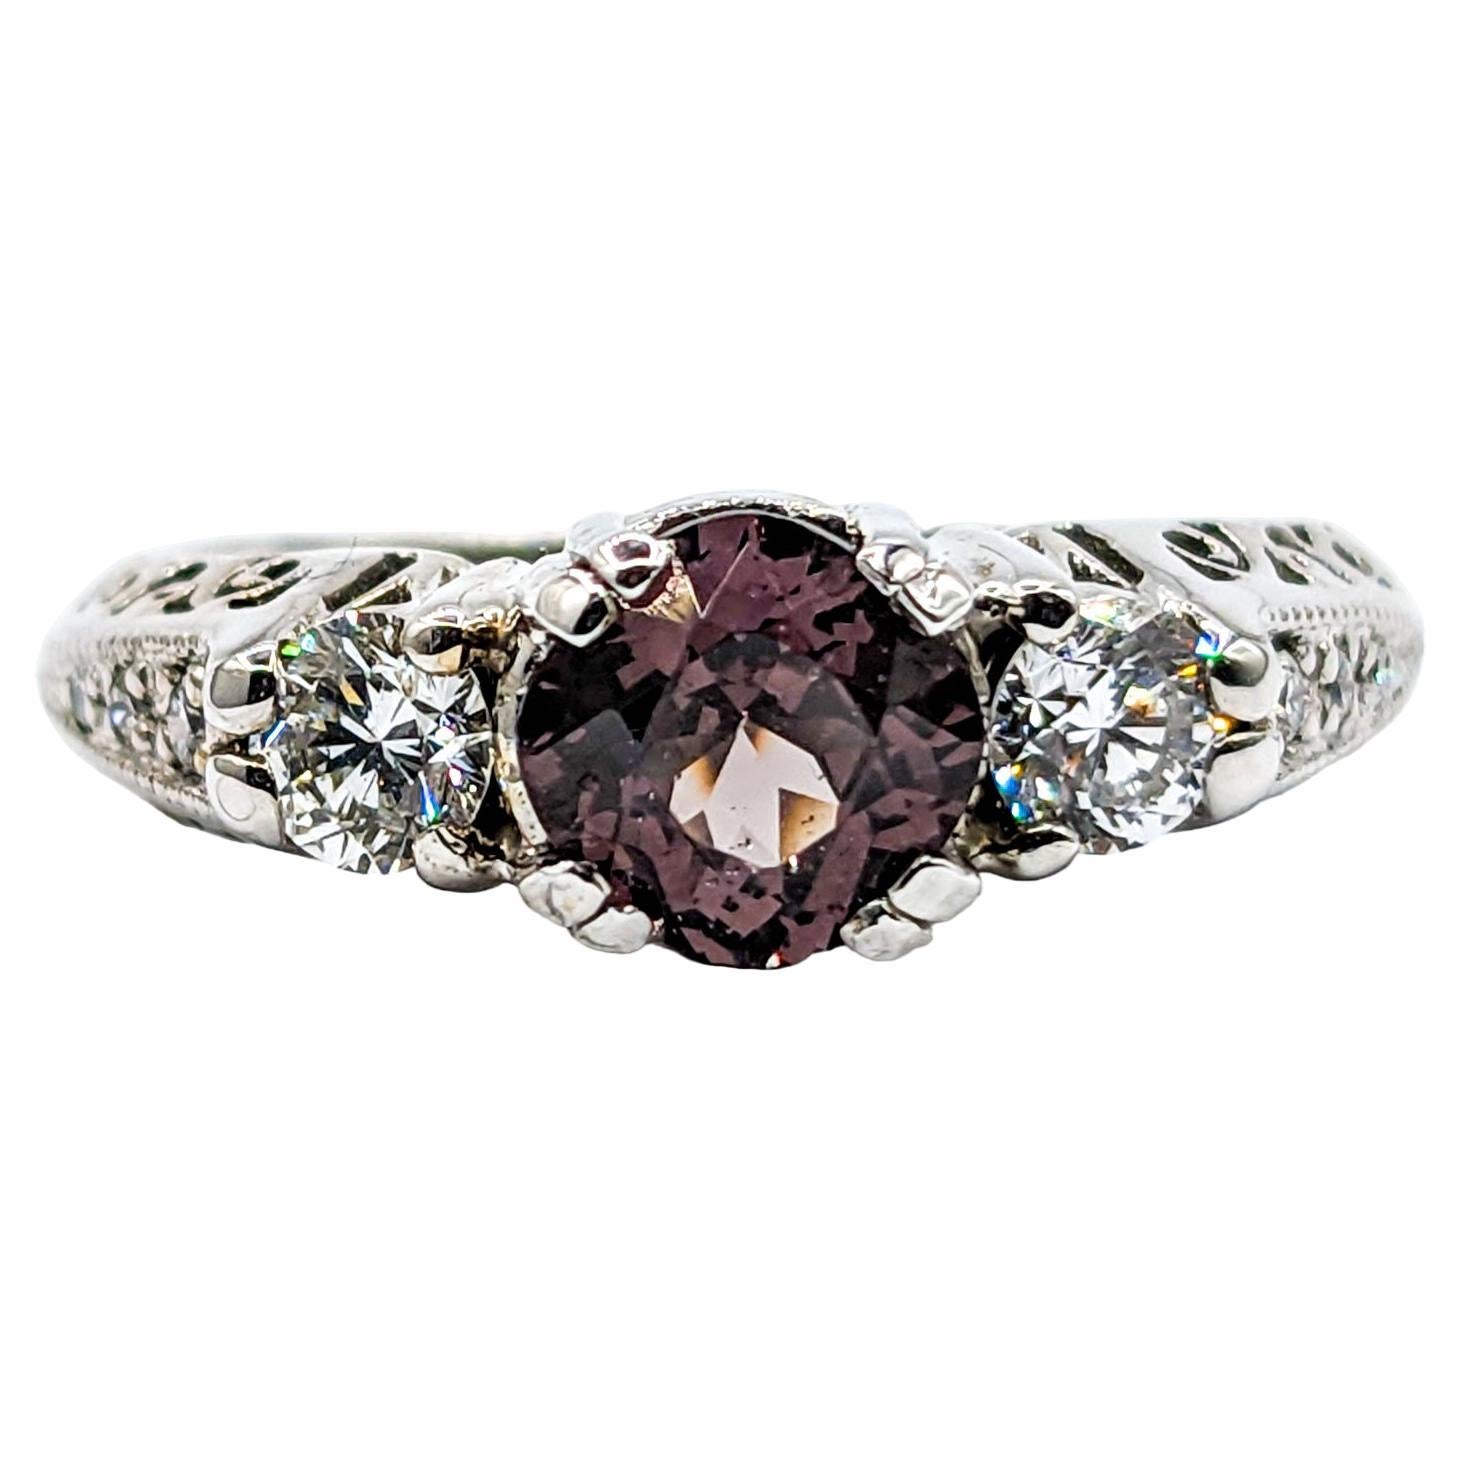 Color Change Garnet & Diamond Filigree Ring